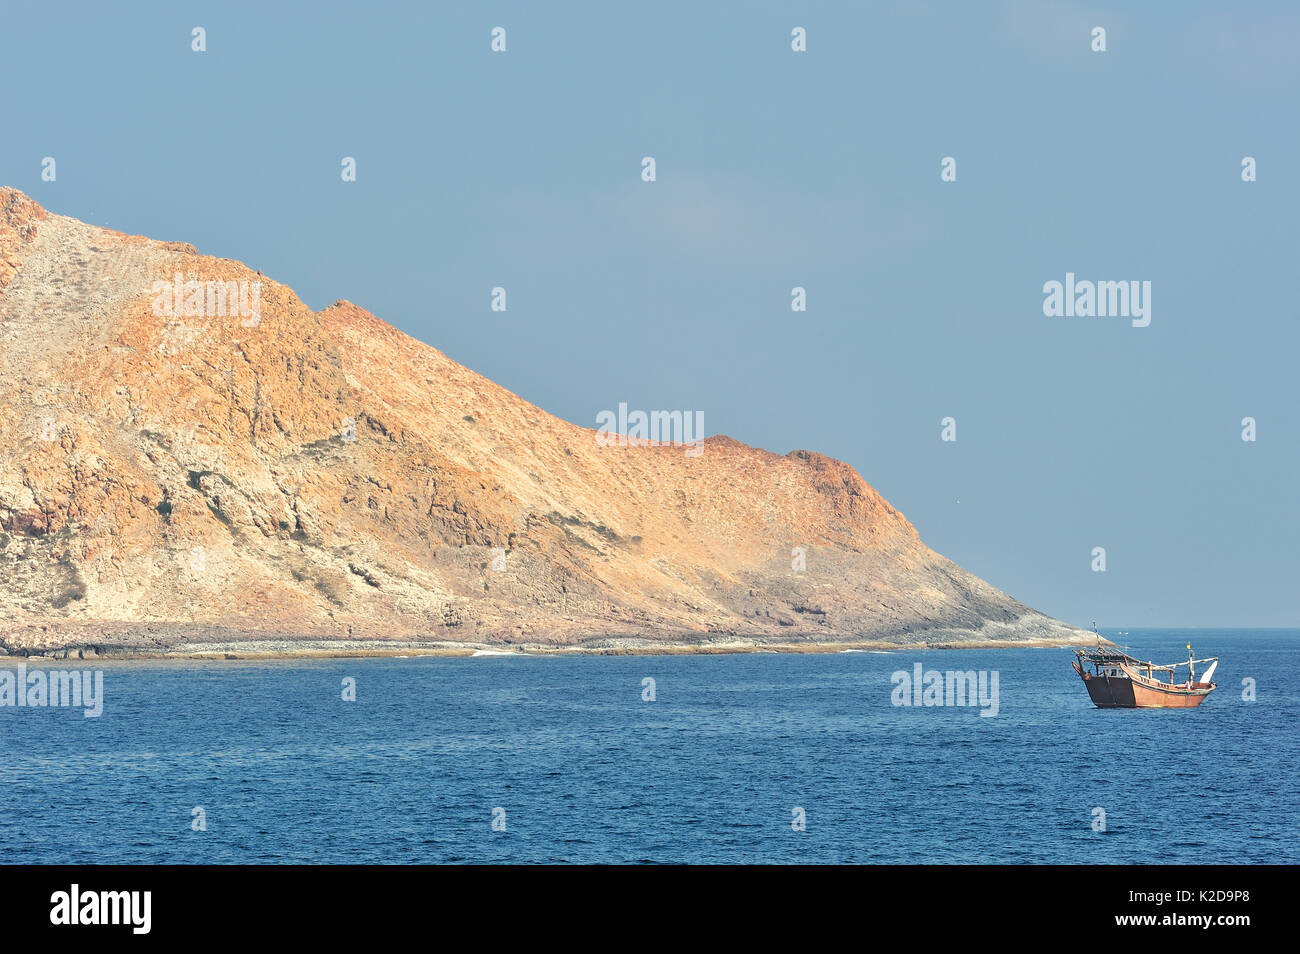 Una barca da pesca vicino al Qibliyah isola, una delle isole Hallaniyat, costa di Dhofar, Oman, Mare Arabico Foto Stock